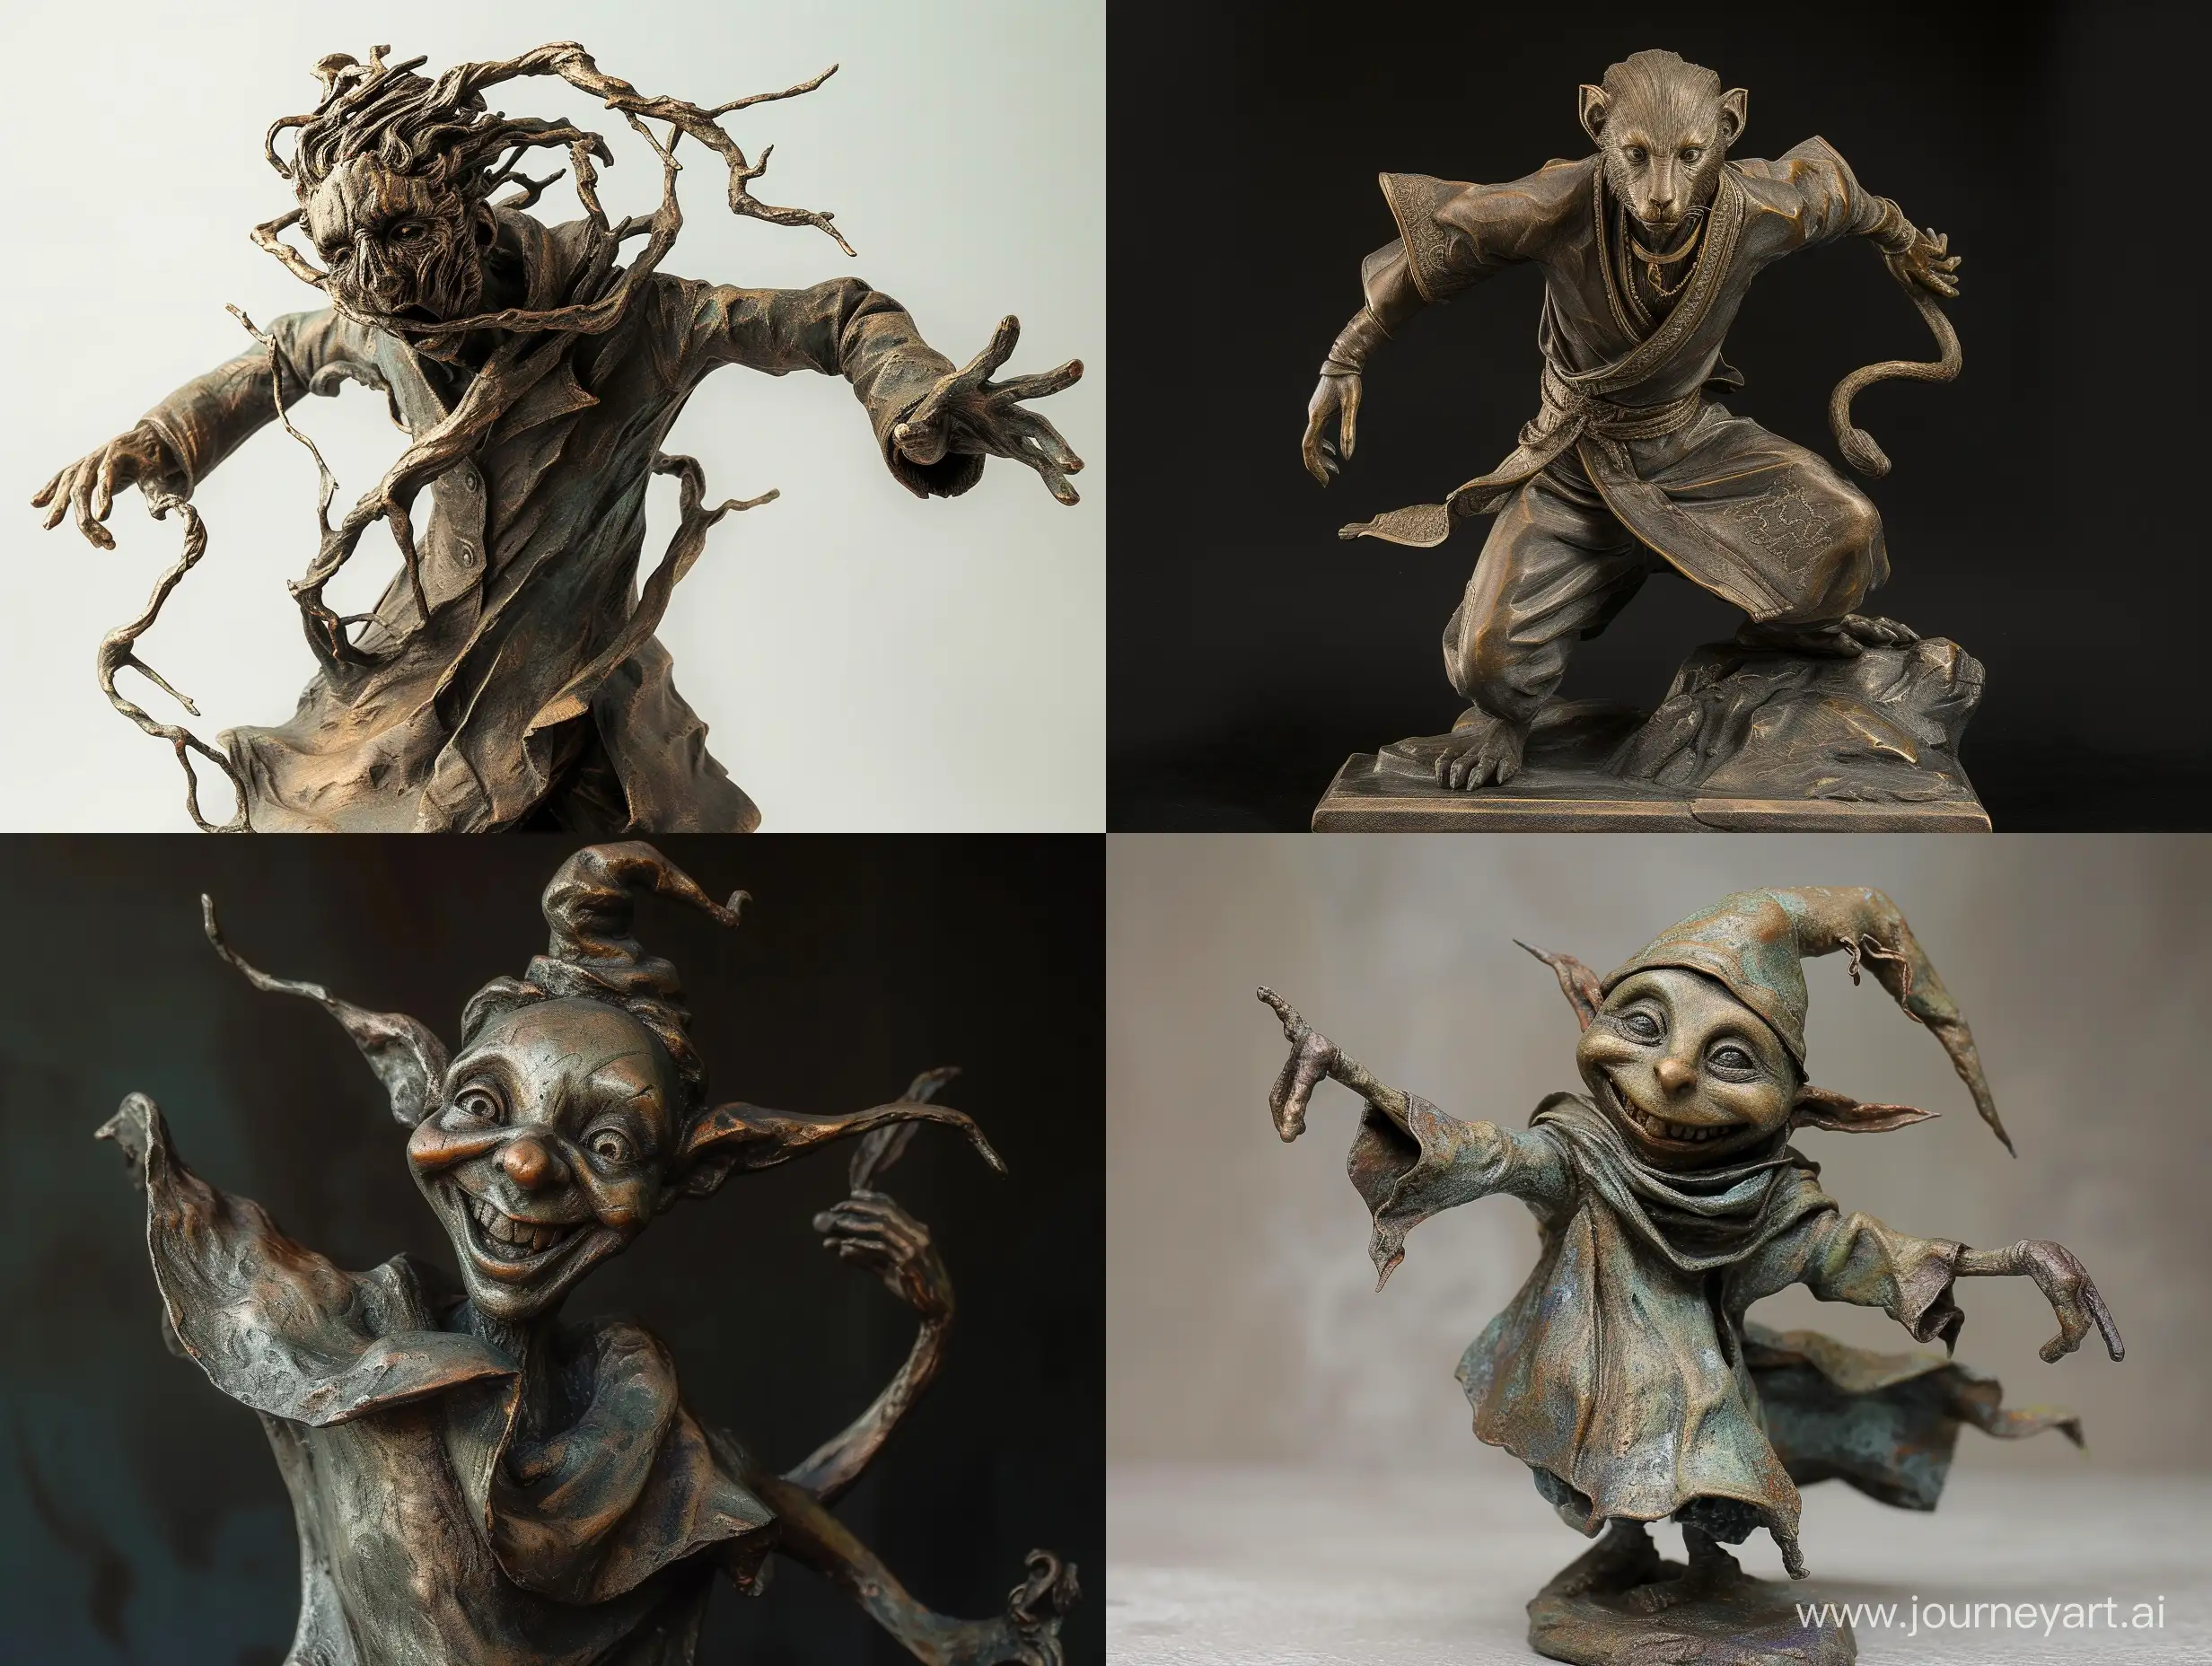 Magical-Bronze-Statue-Depicting-a-NonExistent-Fictional-Character